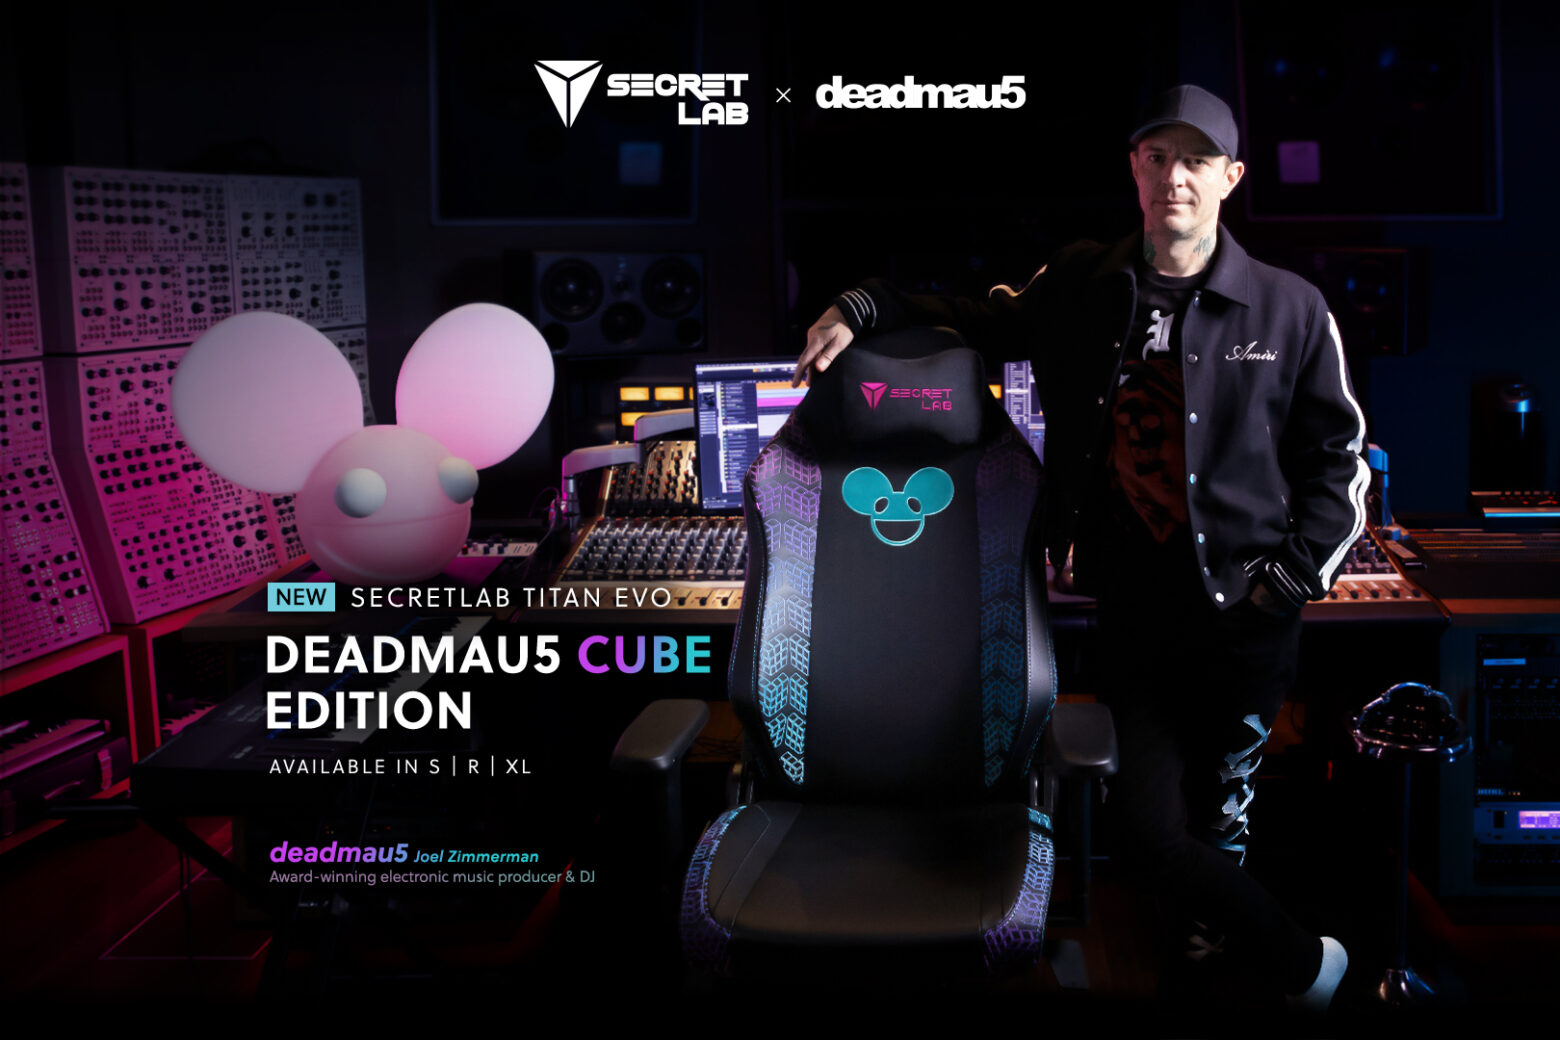 Deadmau5 teams with Secretlab once again for custom, limited TITAN Evo Cube desk chair